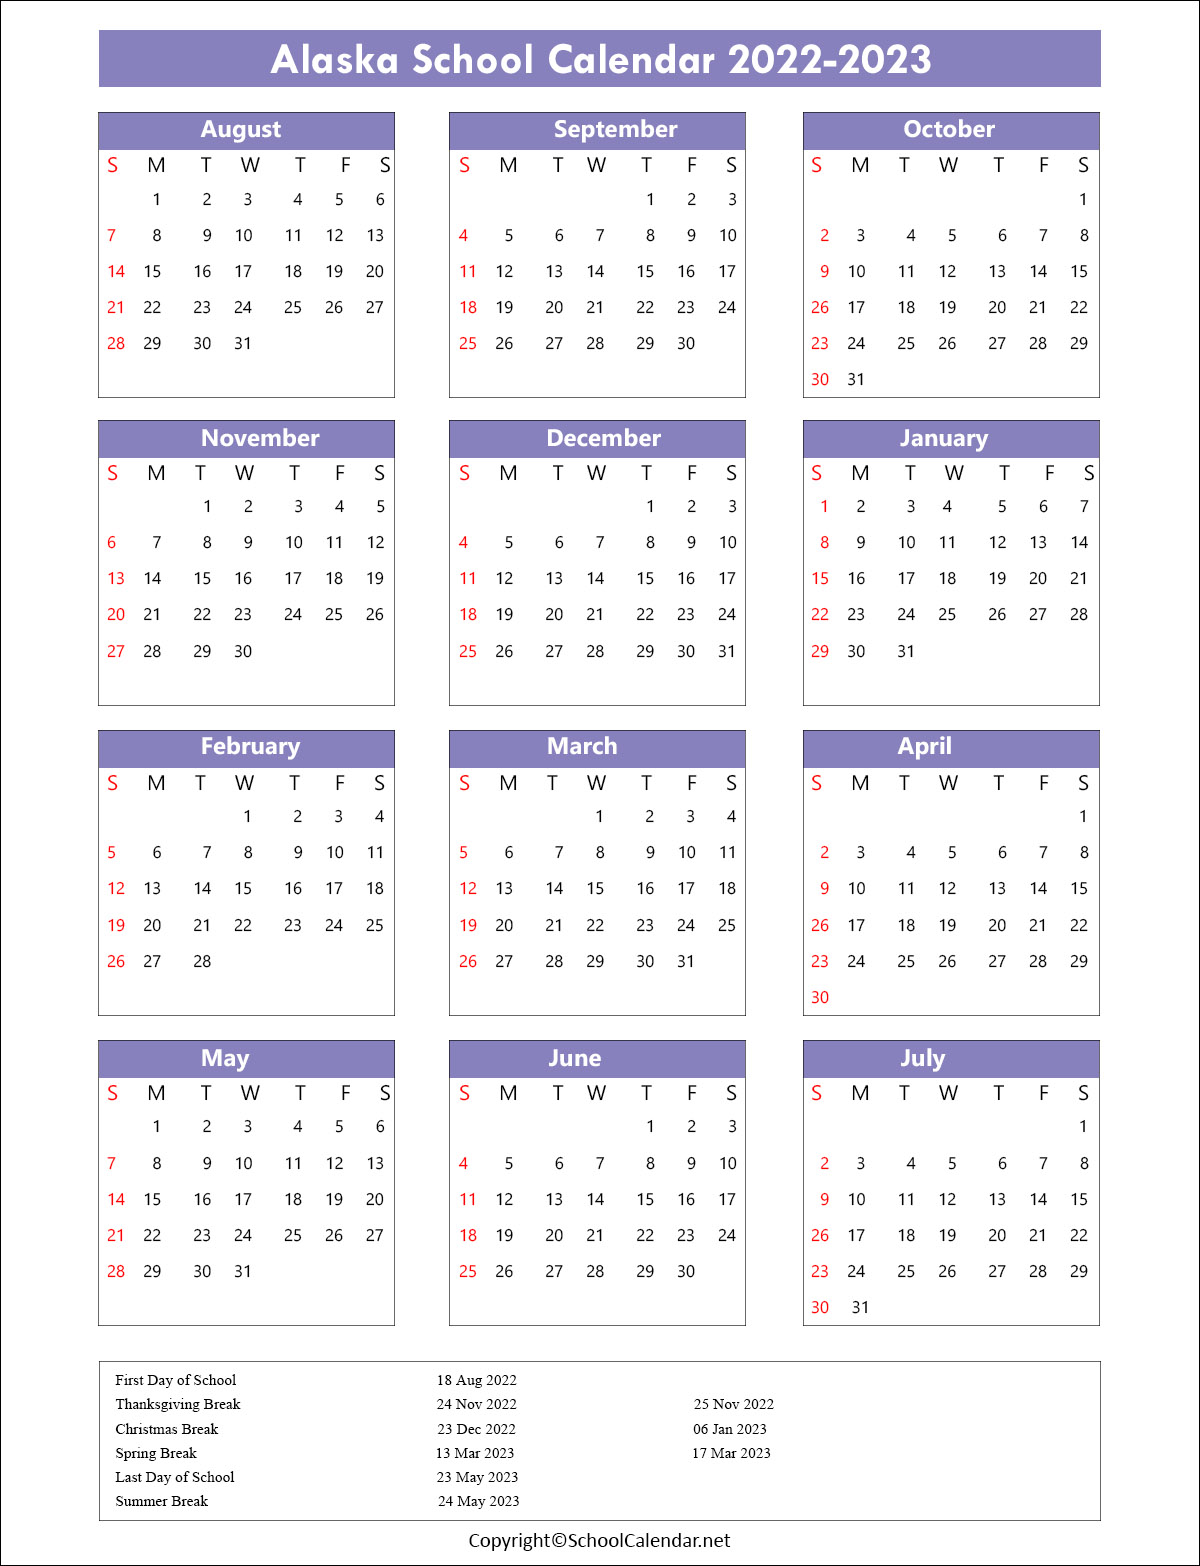 Alaska School Calendar 2022